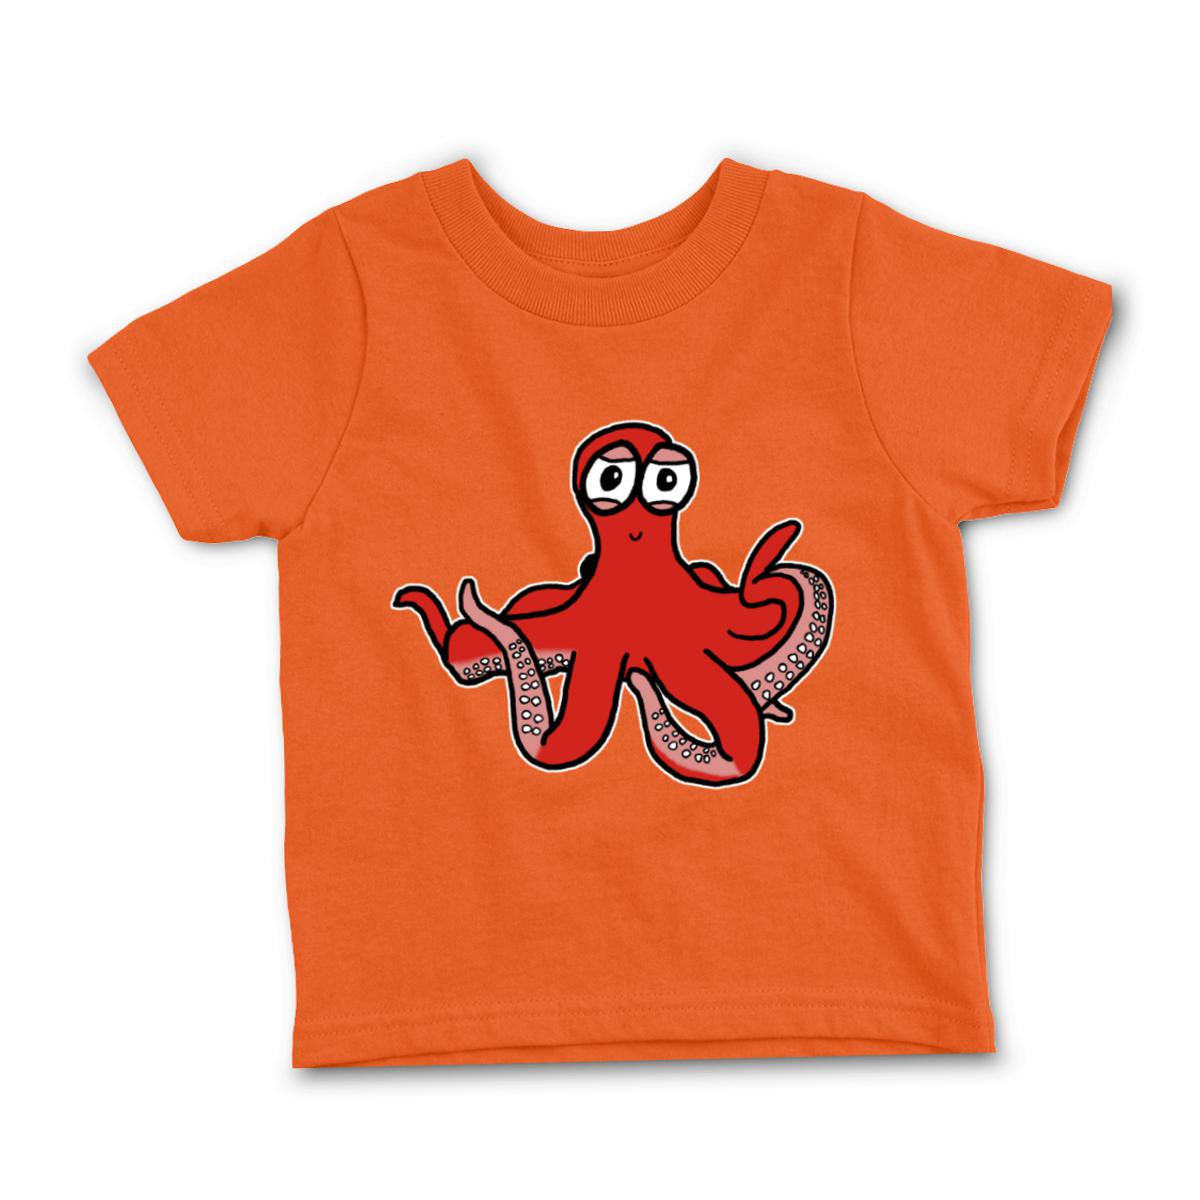 Octopus Infant Tee 18M orange